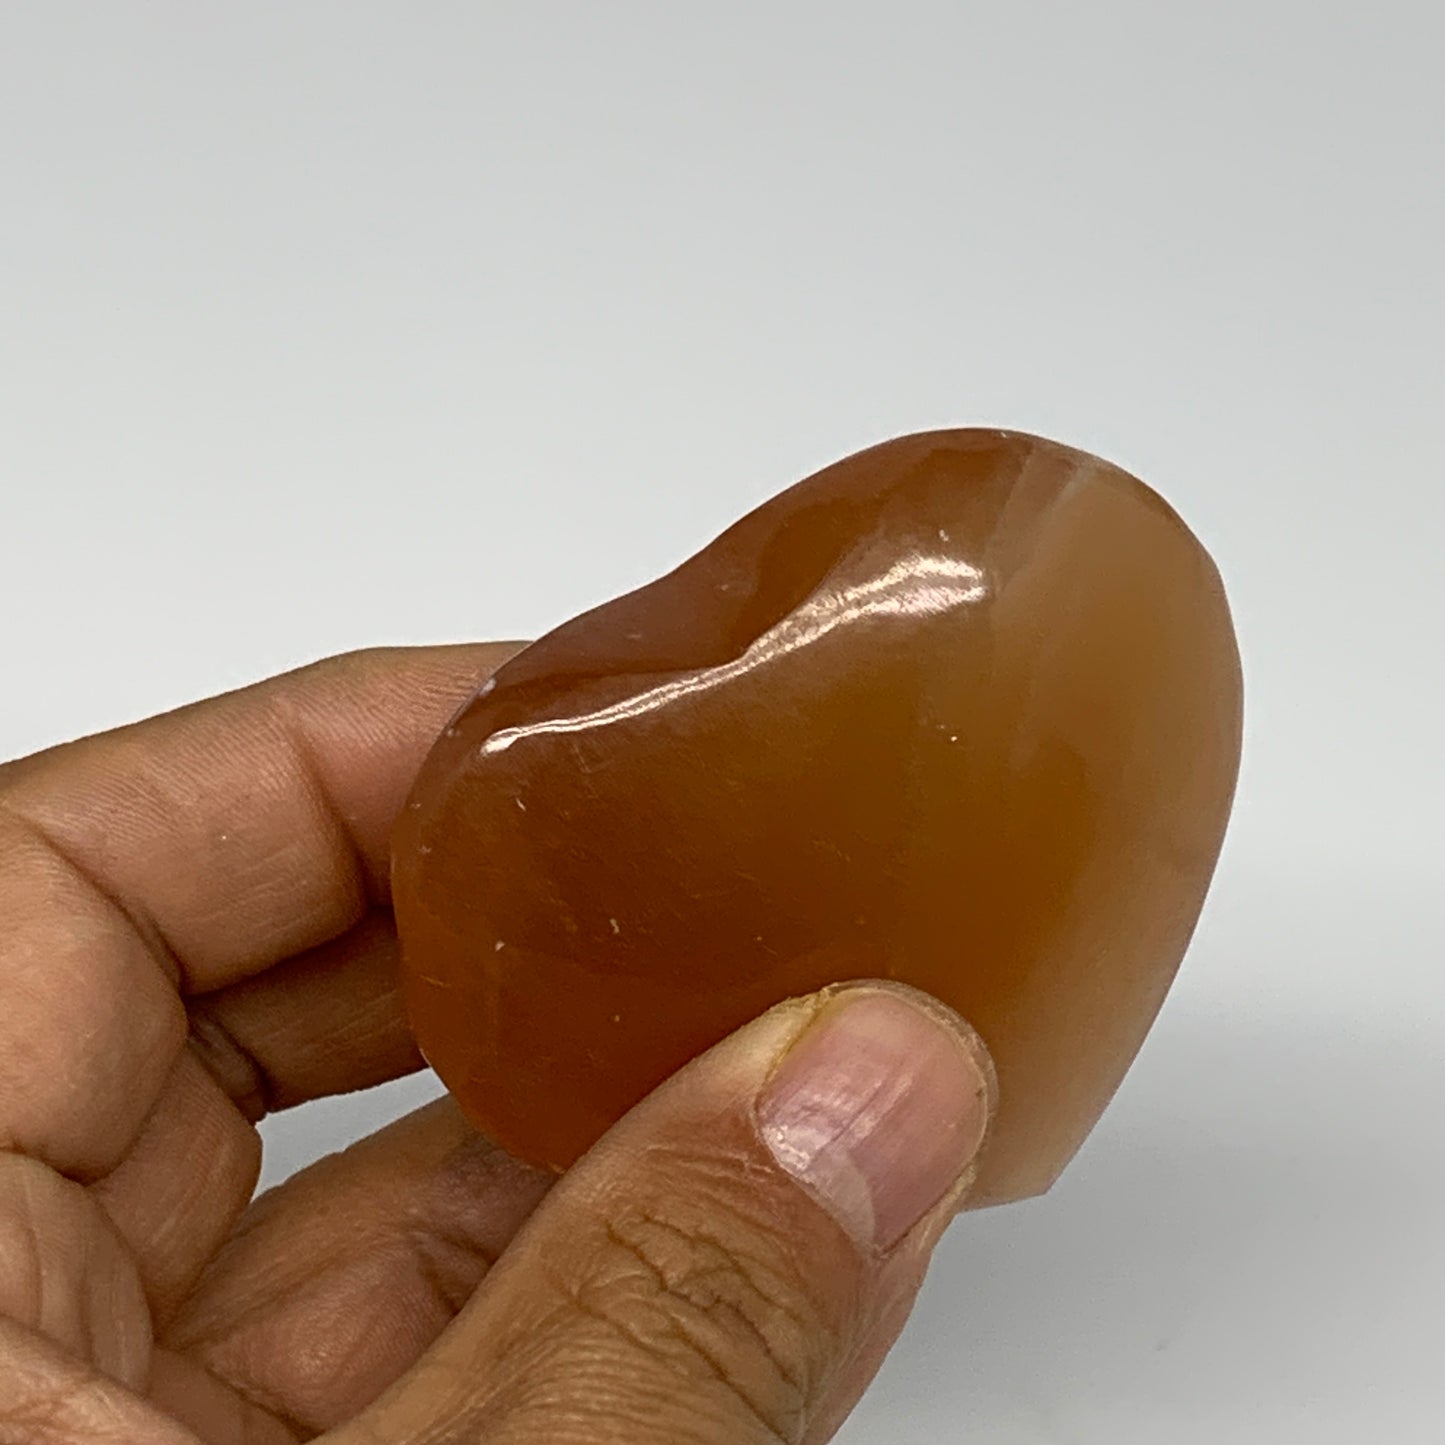 107.5g, 2.3"x2.4"x0.9" Honey Calcite Heart Gemstones, Collectible @Pakistan,B252